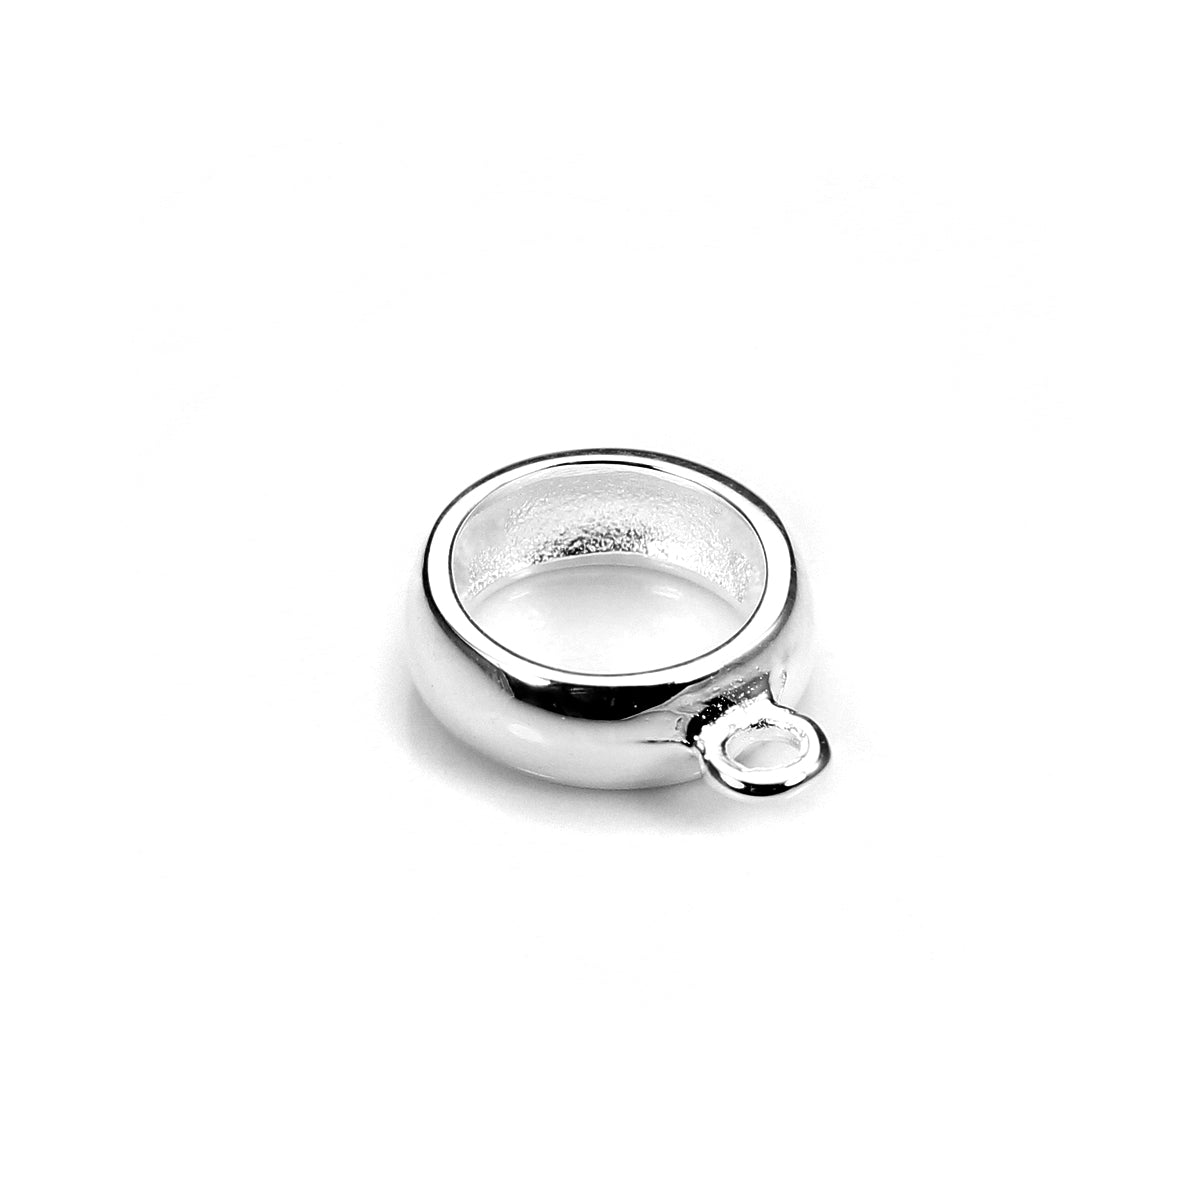 Sterling Silver 6.5mm Hanger Bead Charm